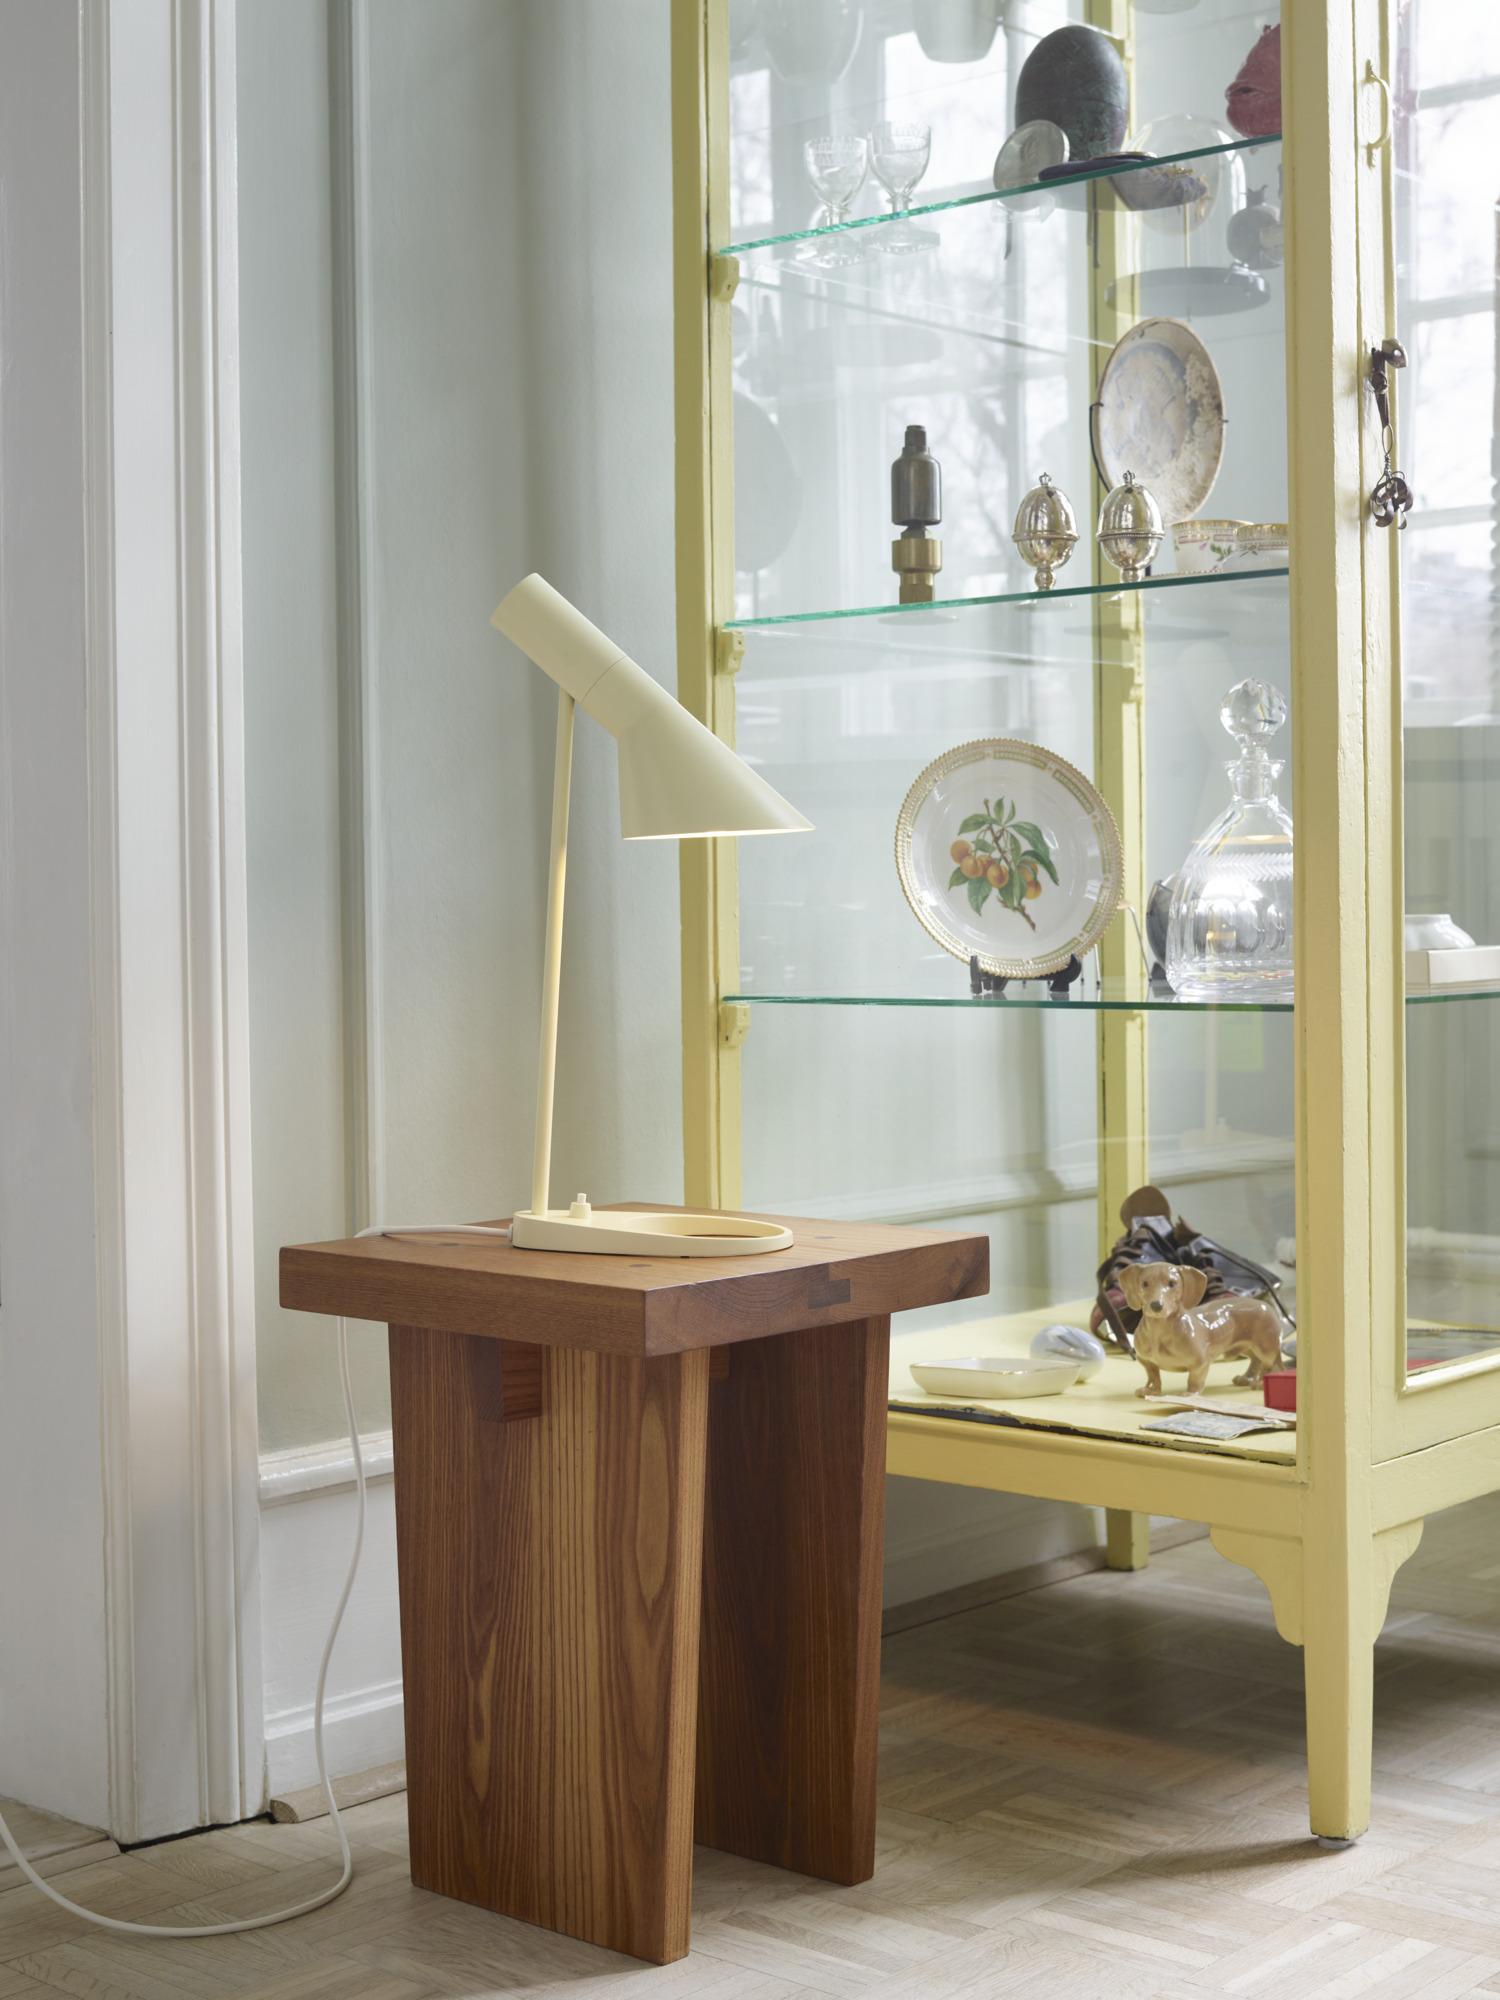 Arne Jacobsen 'AJ Mini' Table Lamp in Warm Sand for Louis Poulsen For Sale 6